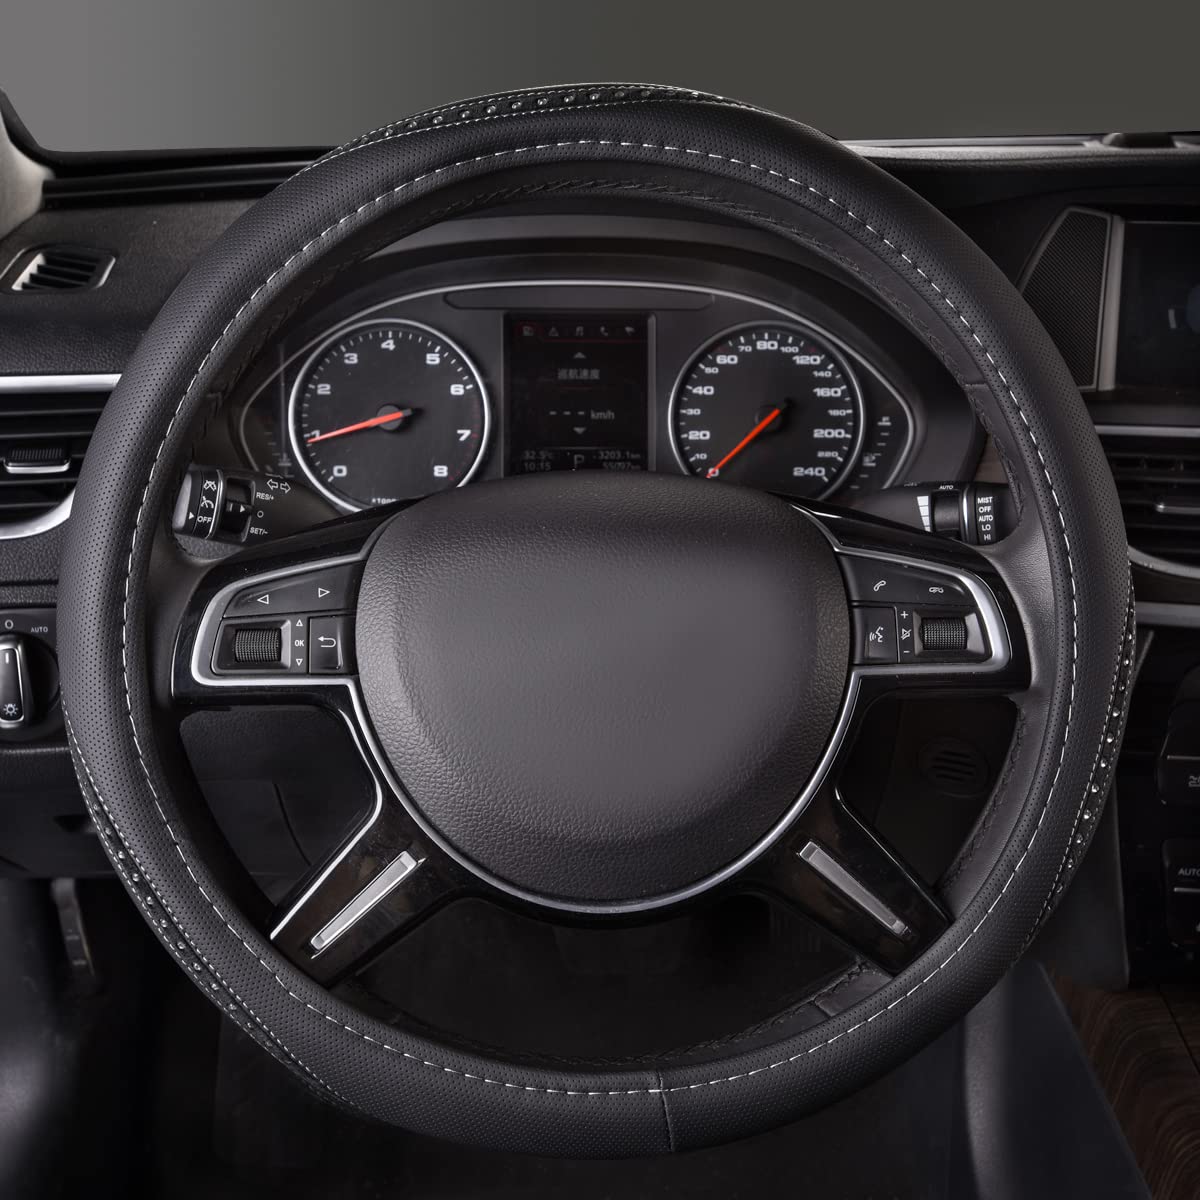 Pretty Rhinestone Leather Universal Steering Wheel Cover,Fit for Car, Suvs,Sedans,Truck-silver